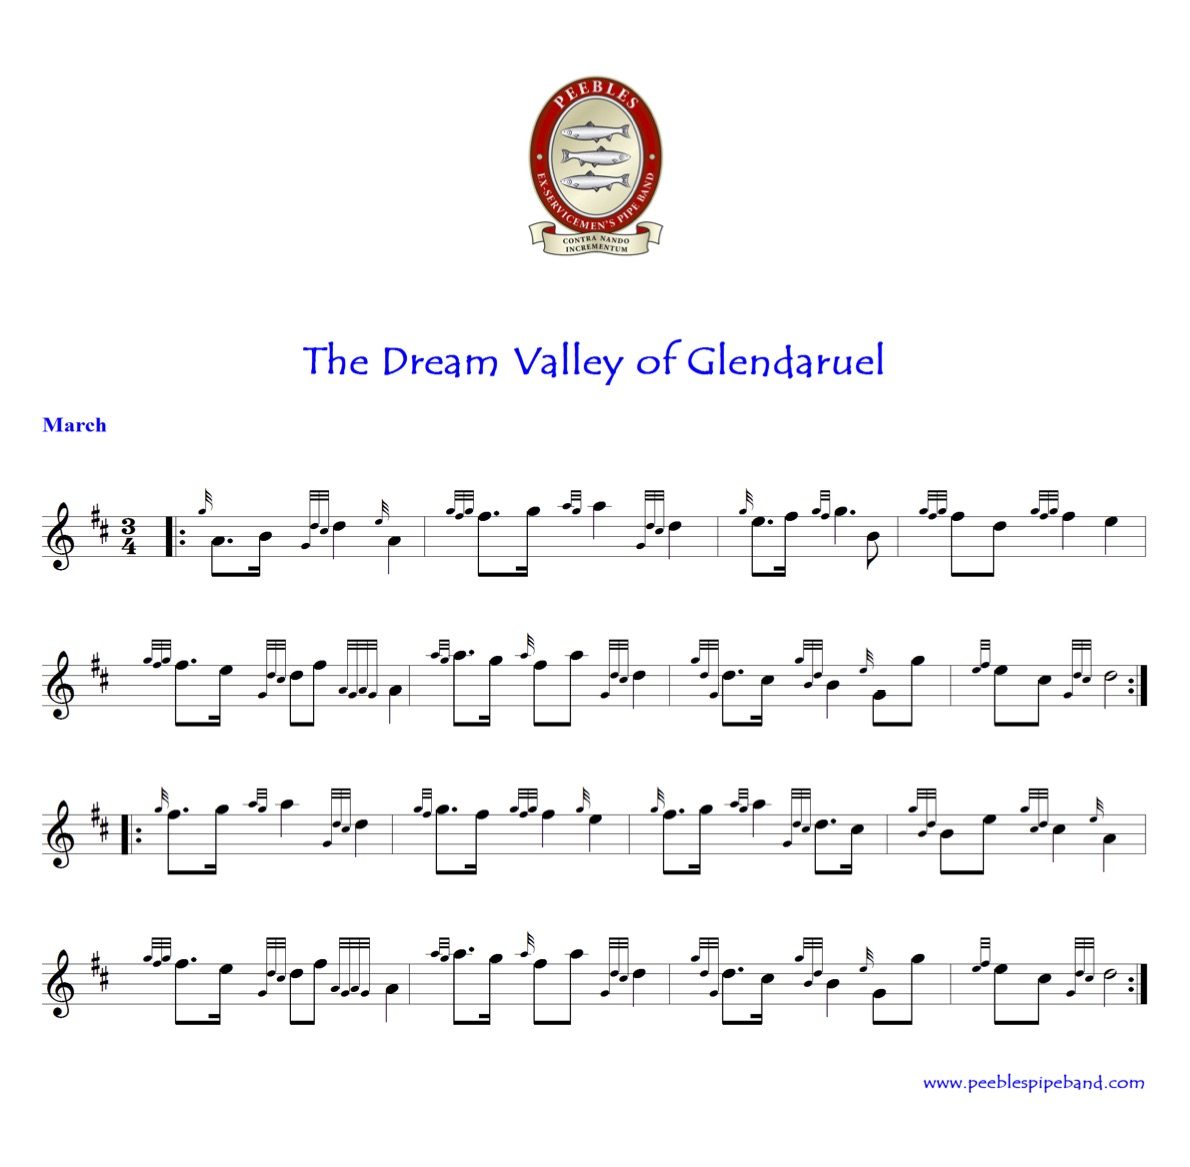 The Dream Valley of Glendaruel